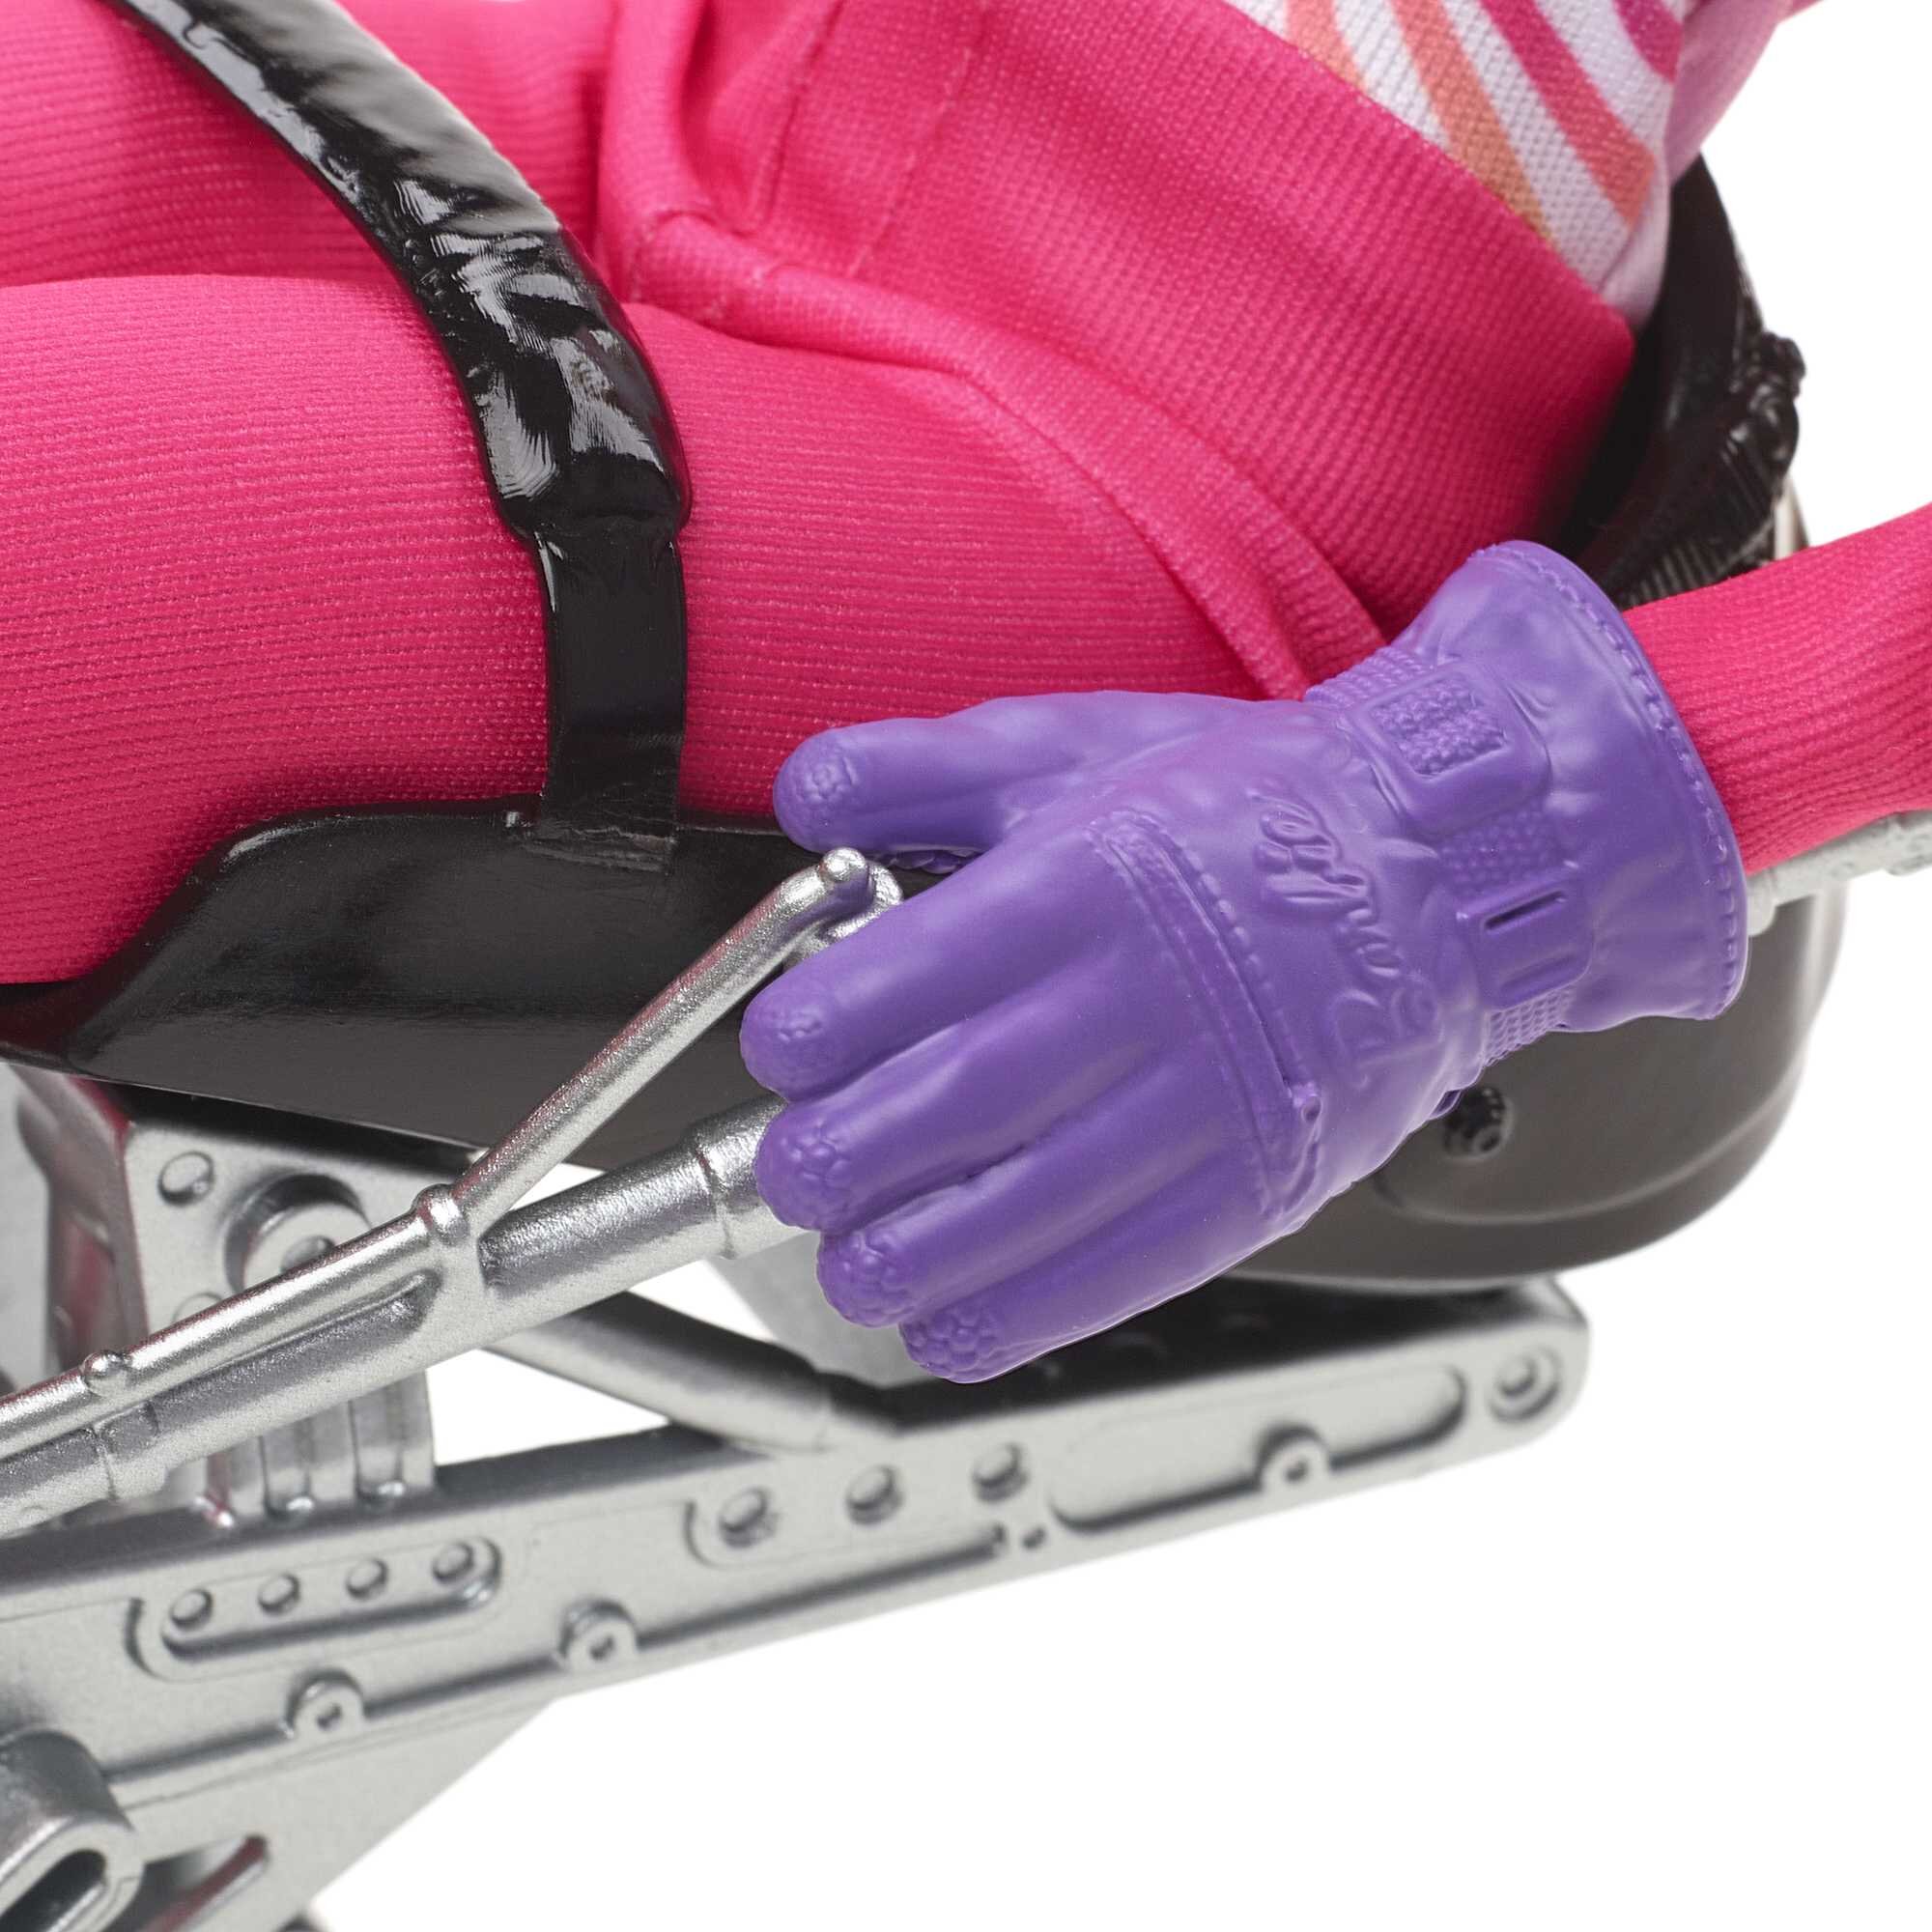 Barbie Career Winter Sports Para Alpine Skier Doll with Helmet, Gloves & Sit Ski